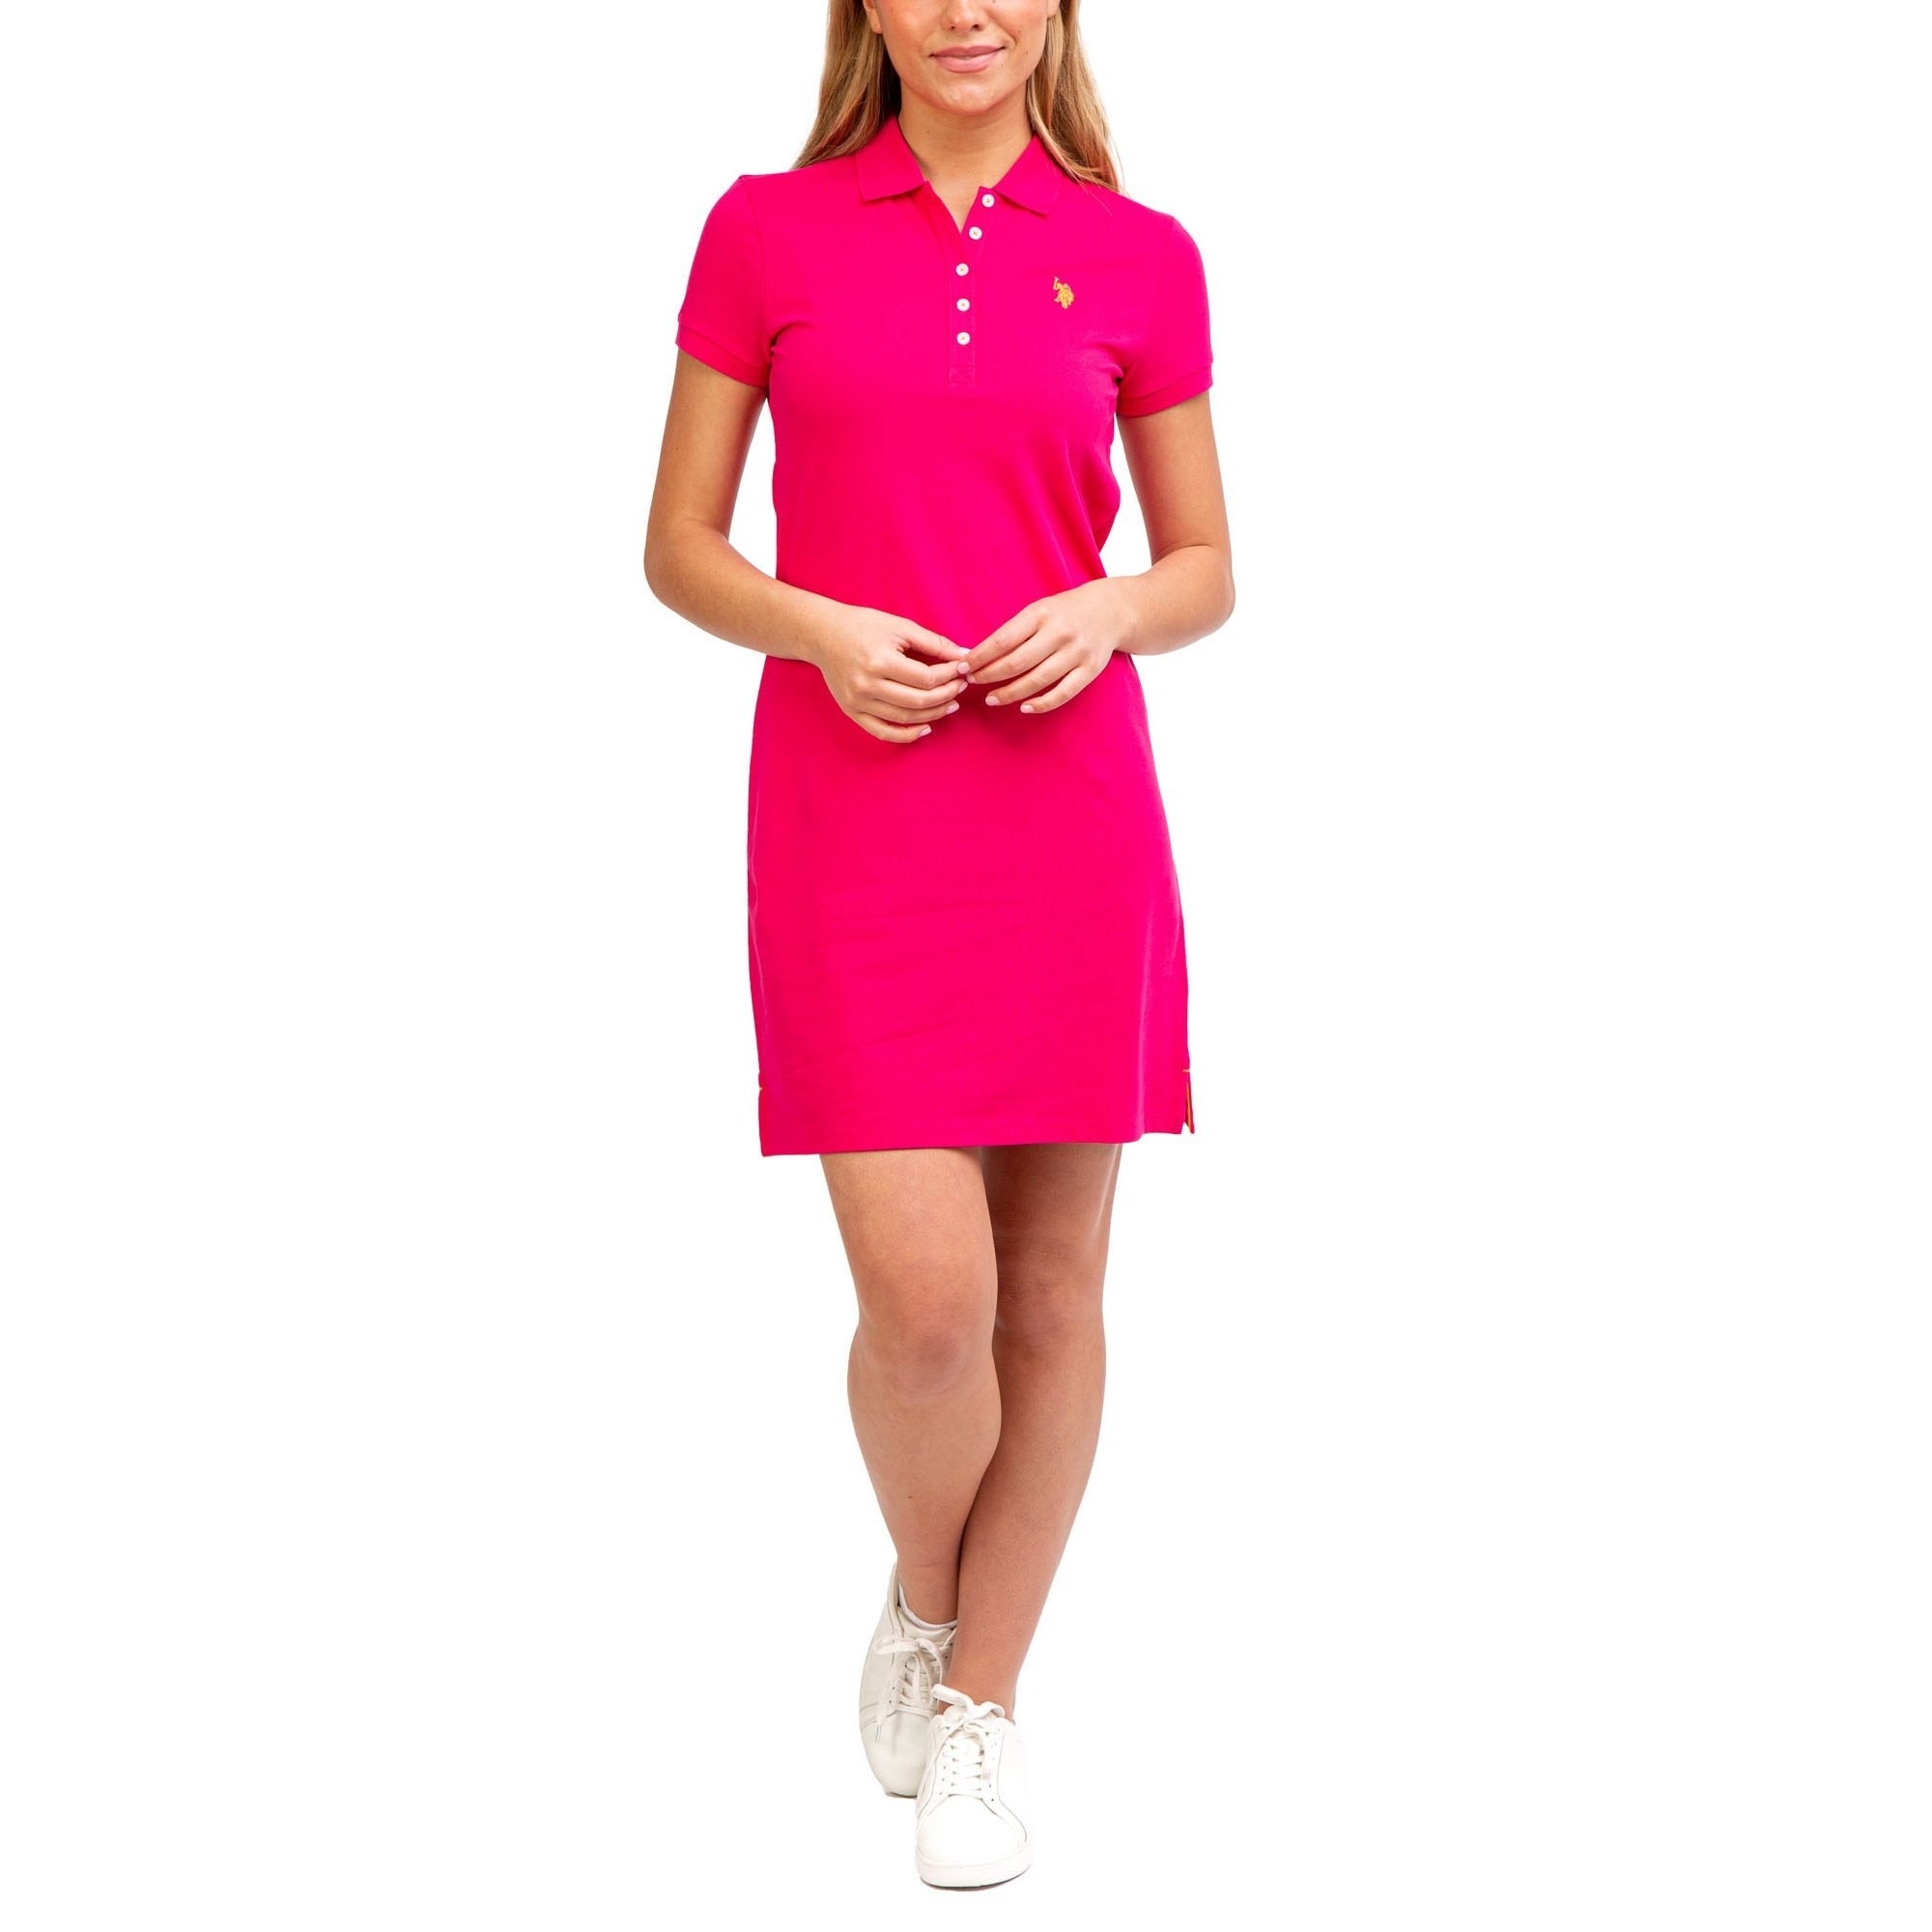 model in pink short-sleeve polo dress